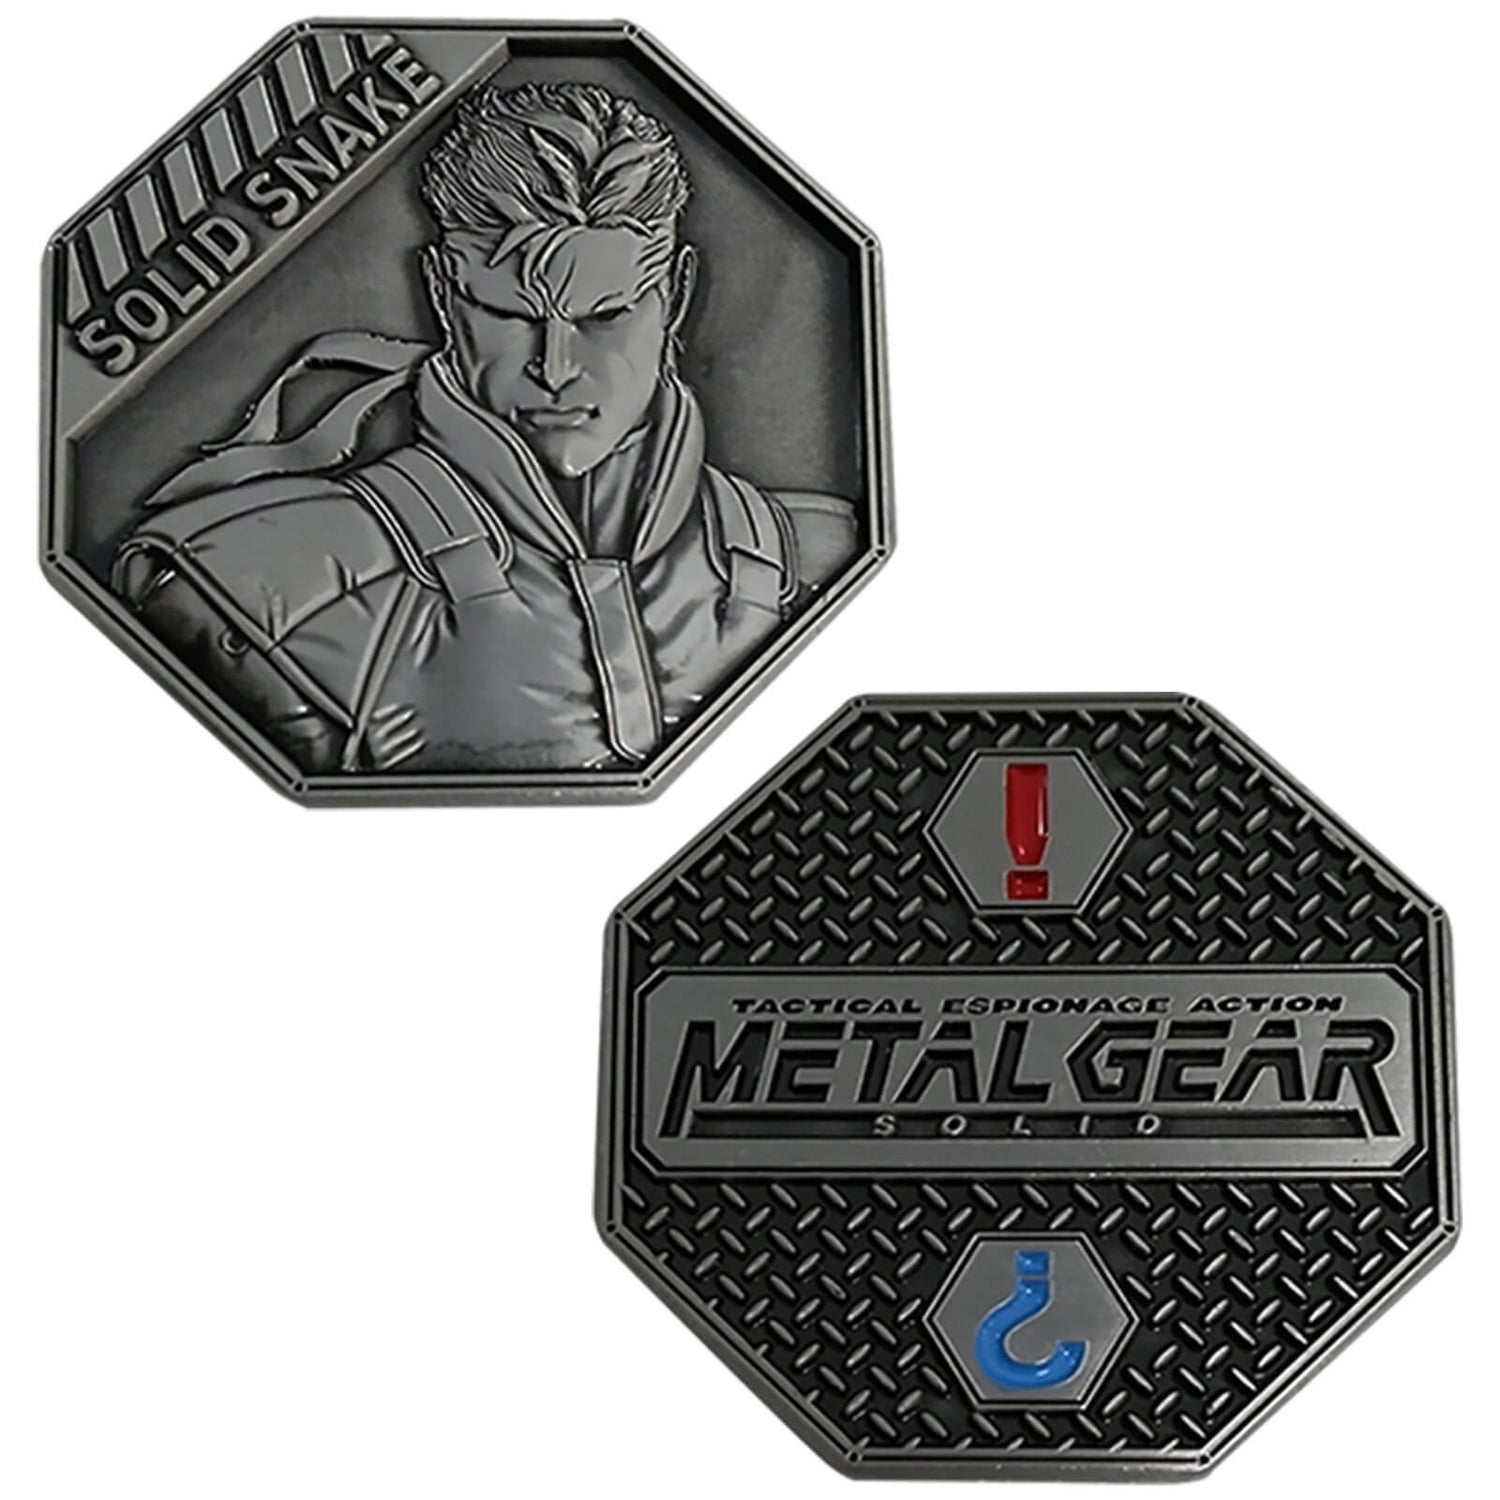 Metal Gear Solid Limited Edition Coin by Fanattik